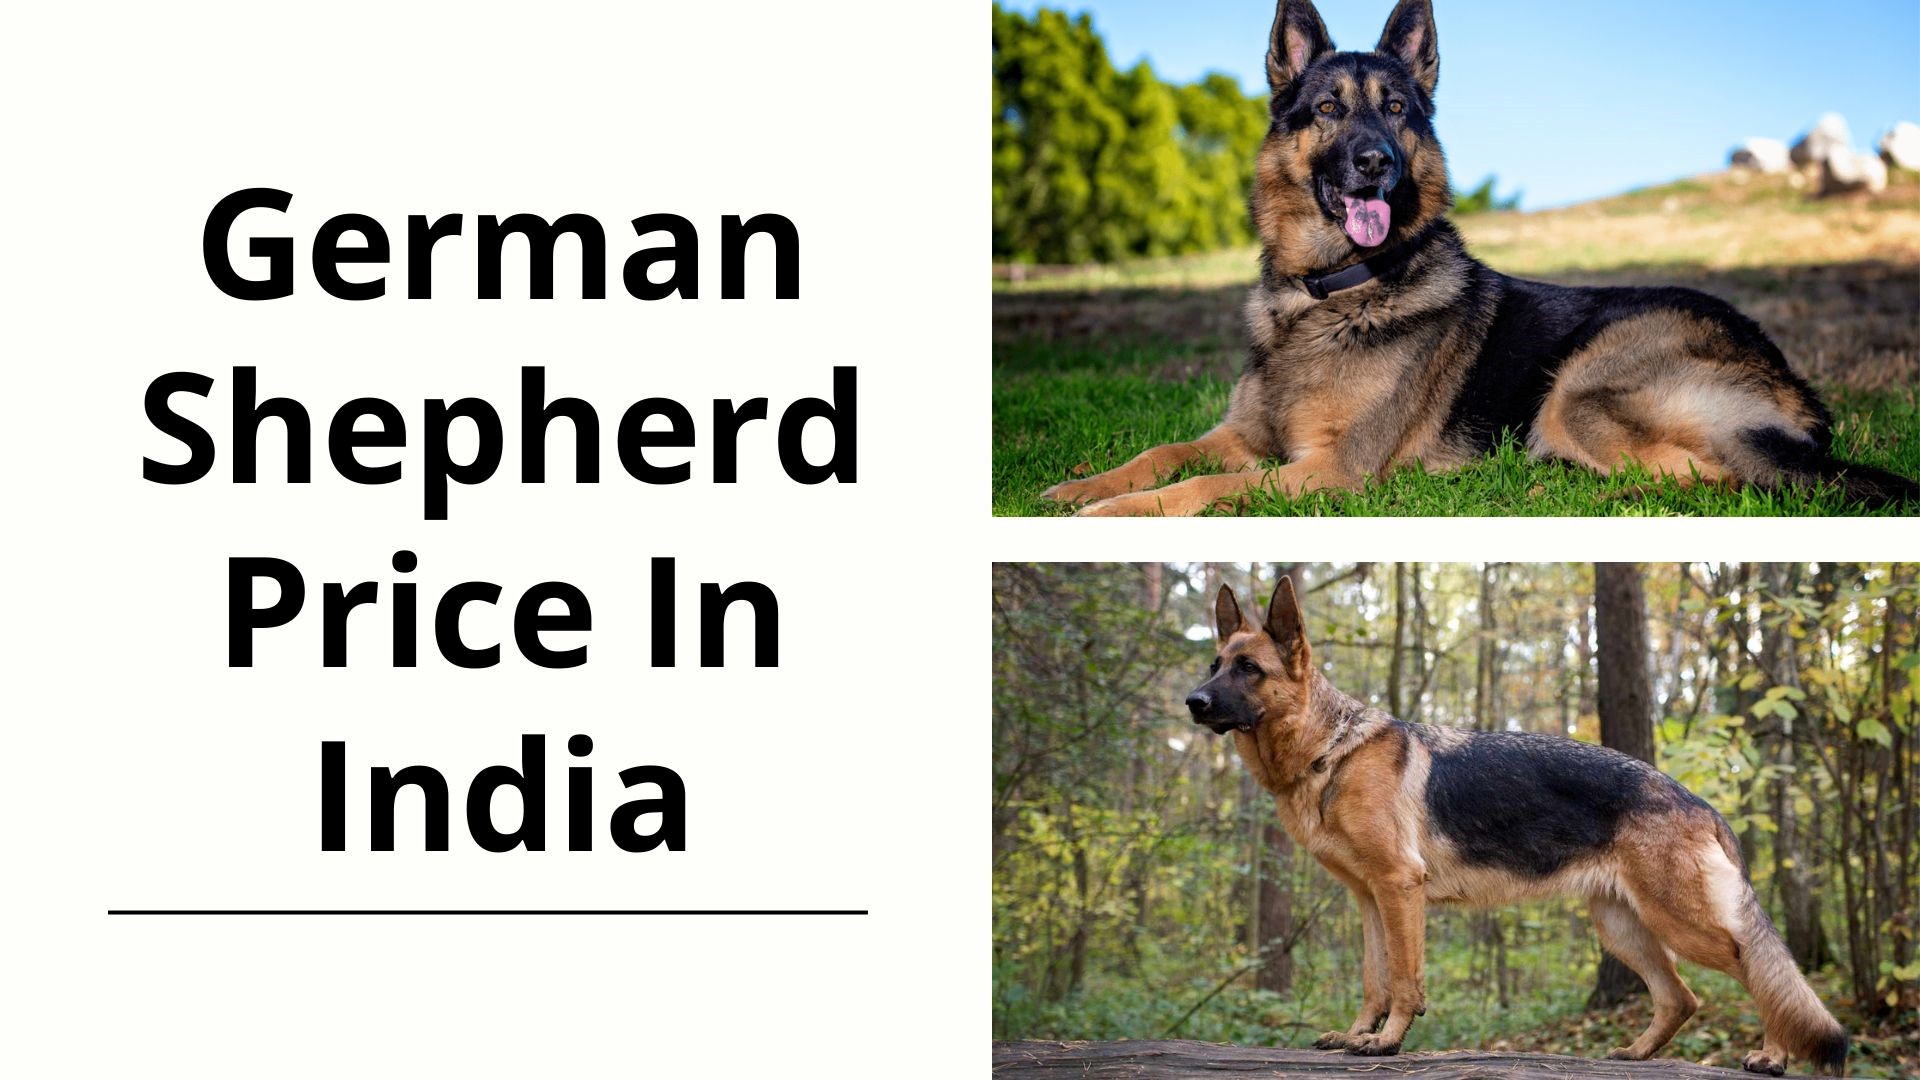 German Shepherd Price In India